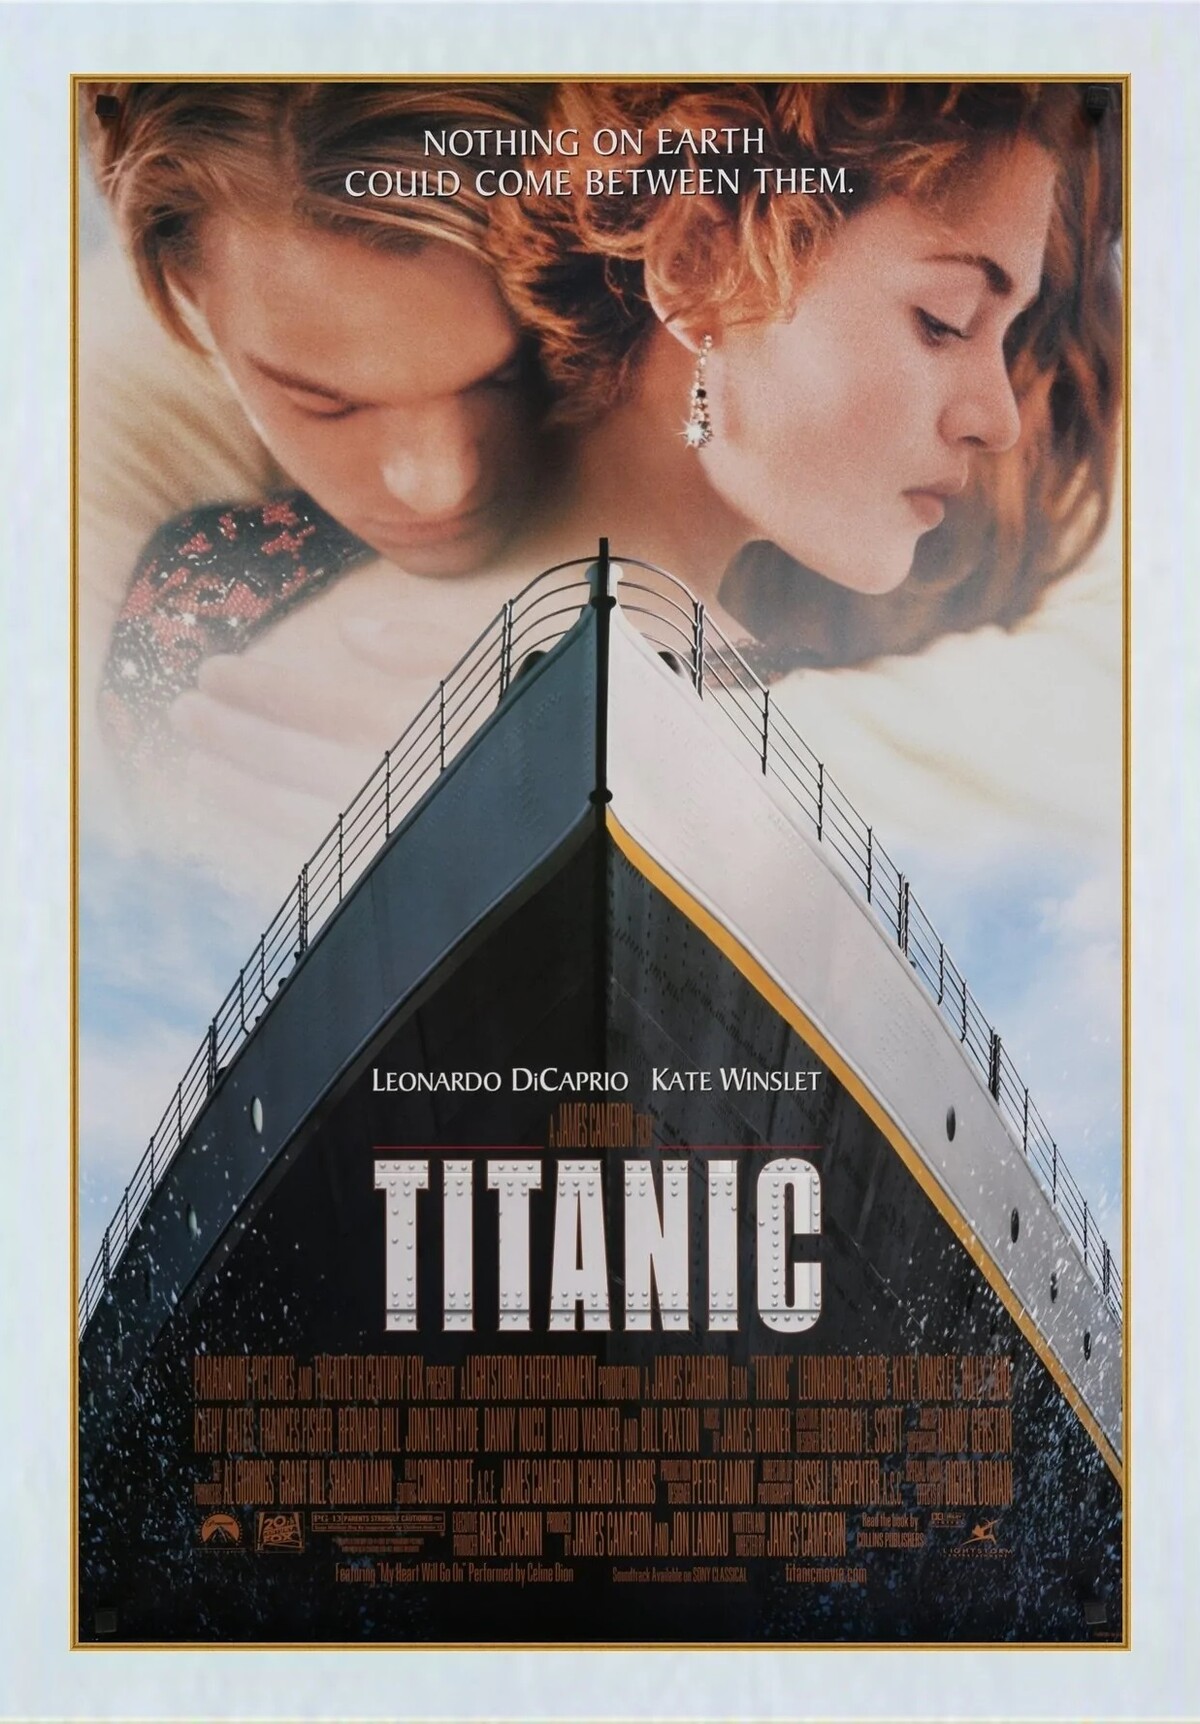 Plagát filmu Titanic z roku 1998.